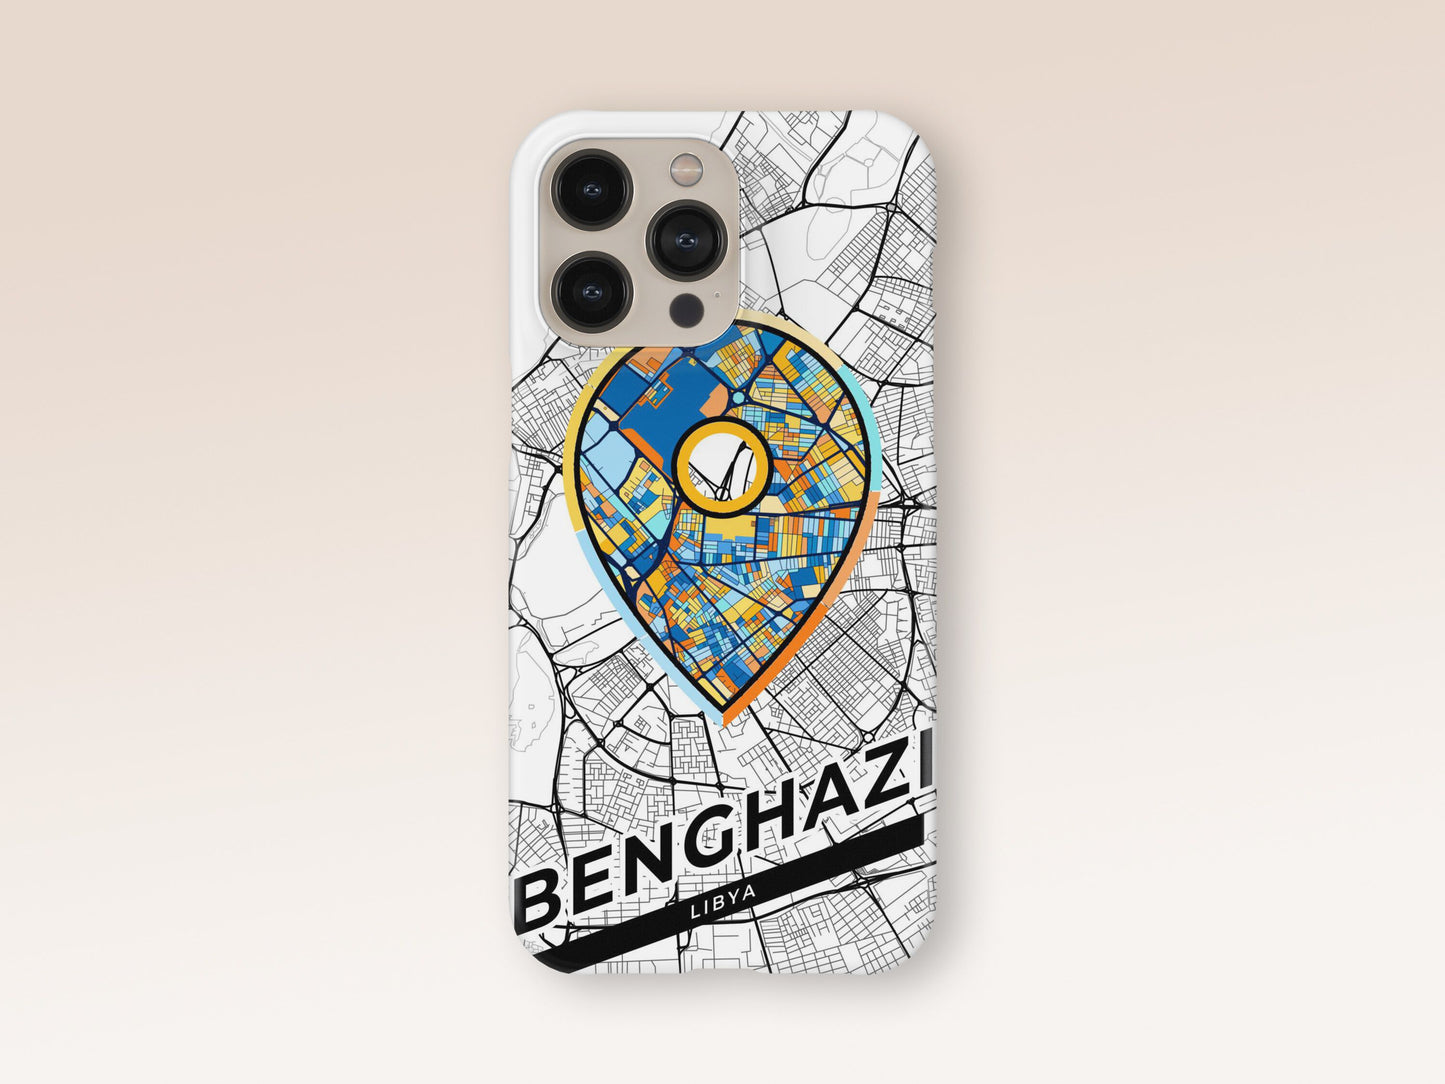 Benghazi Libya slim phone case with colorful icon. Birthday, wedding or housewarming gift. Couple match cases. 1